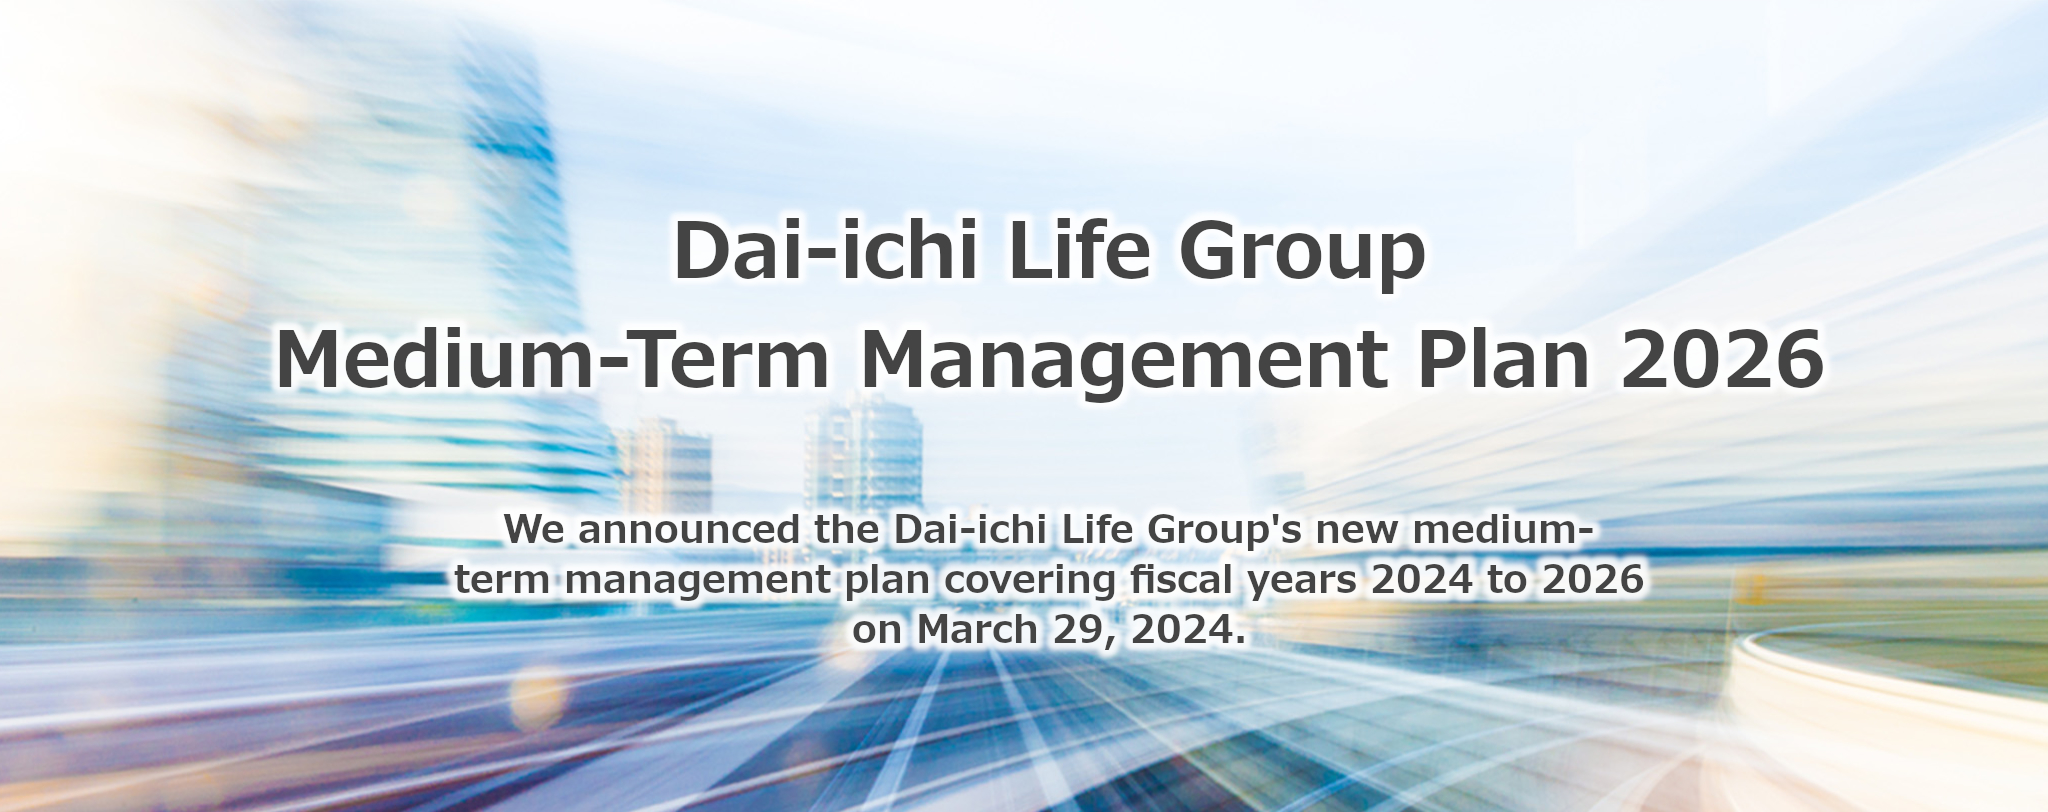 Dai-ichi Life Group Medium-Term Management Plan 2026